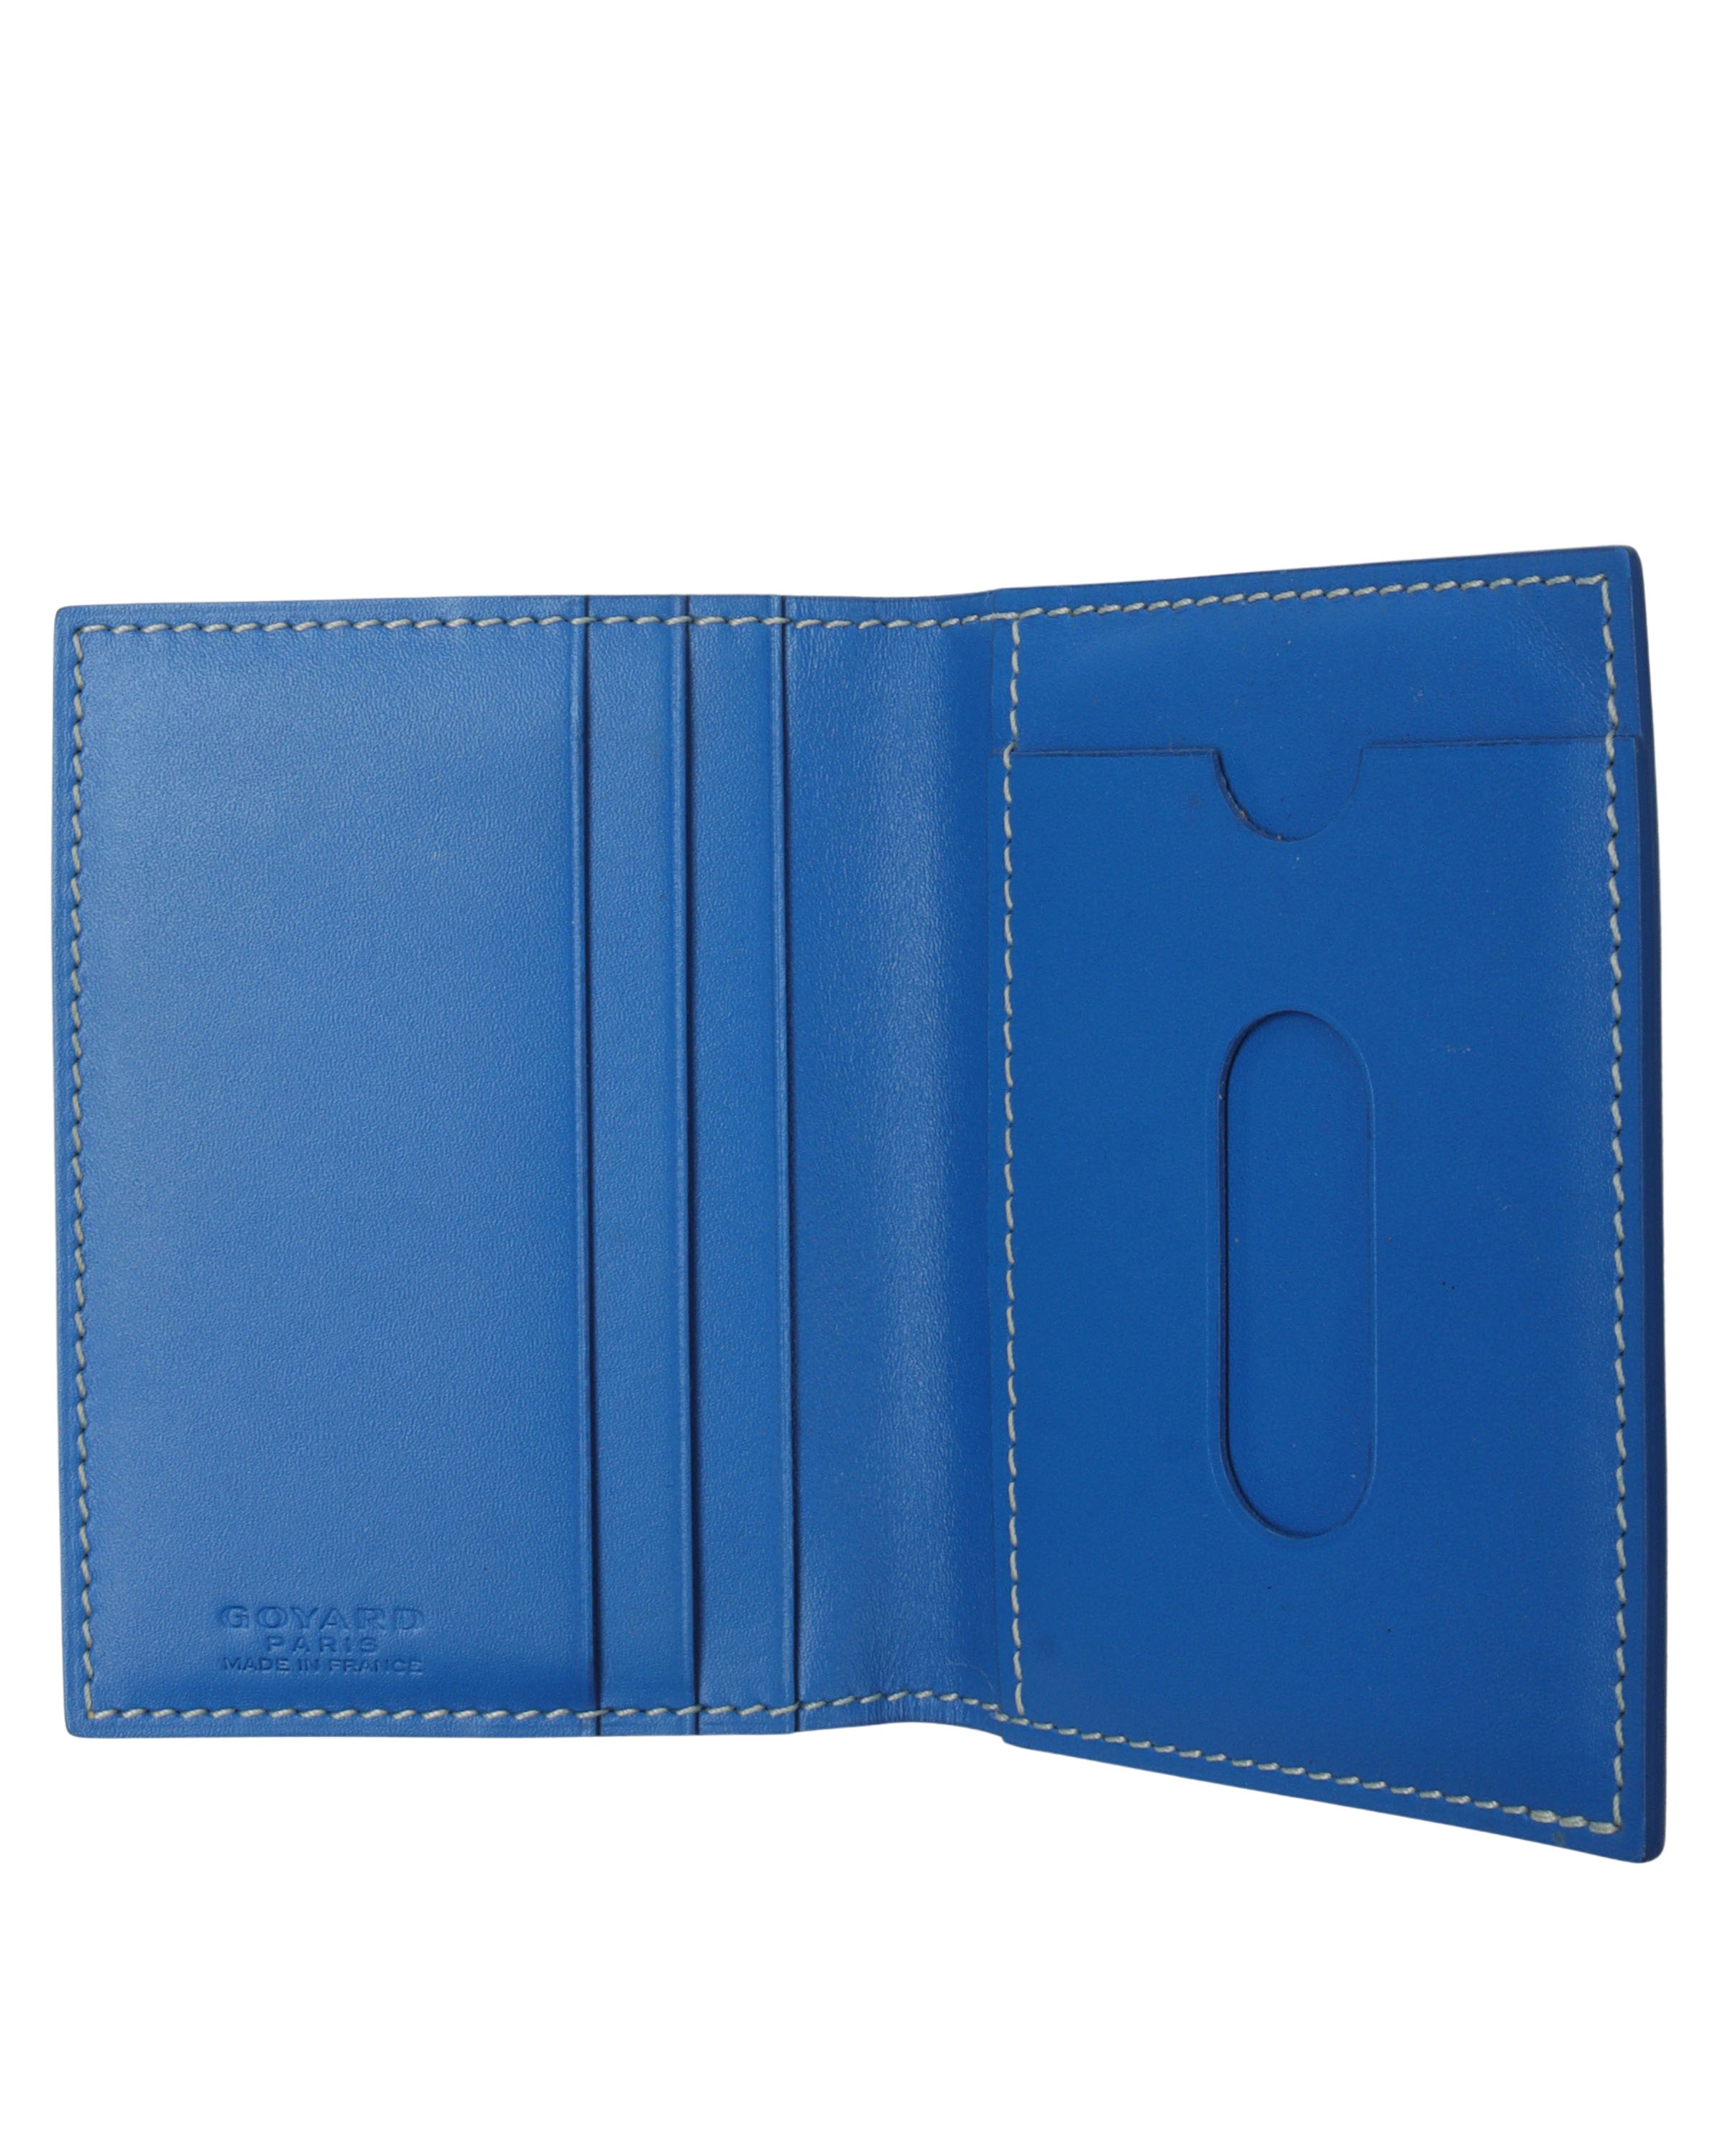 GOYARD SAINT-PIERRE CARD Wallet Black $650.00 - PicClick